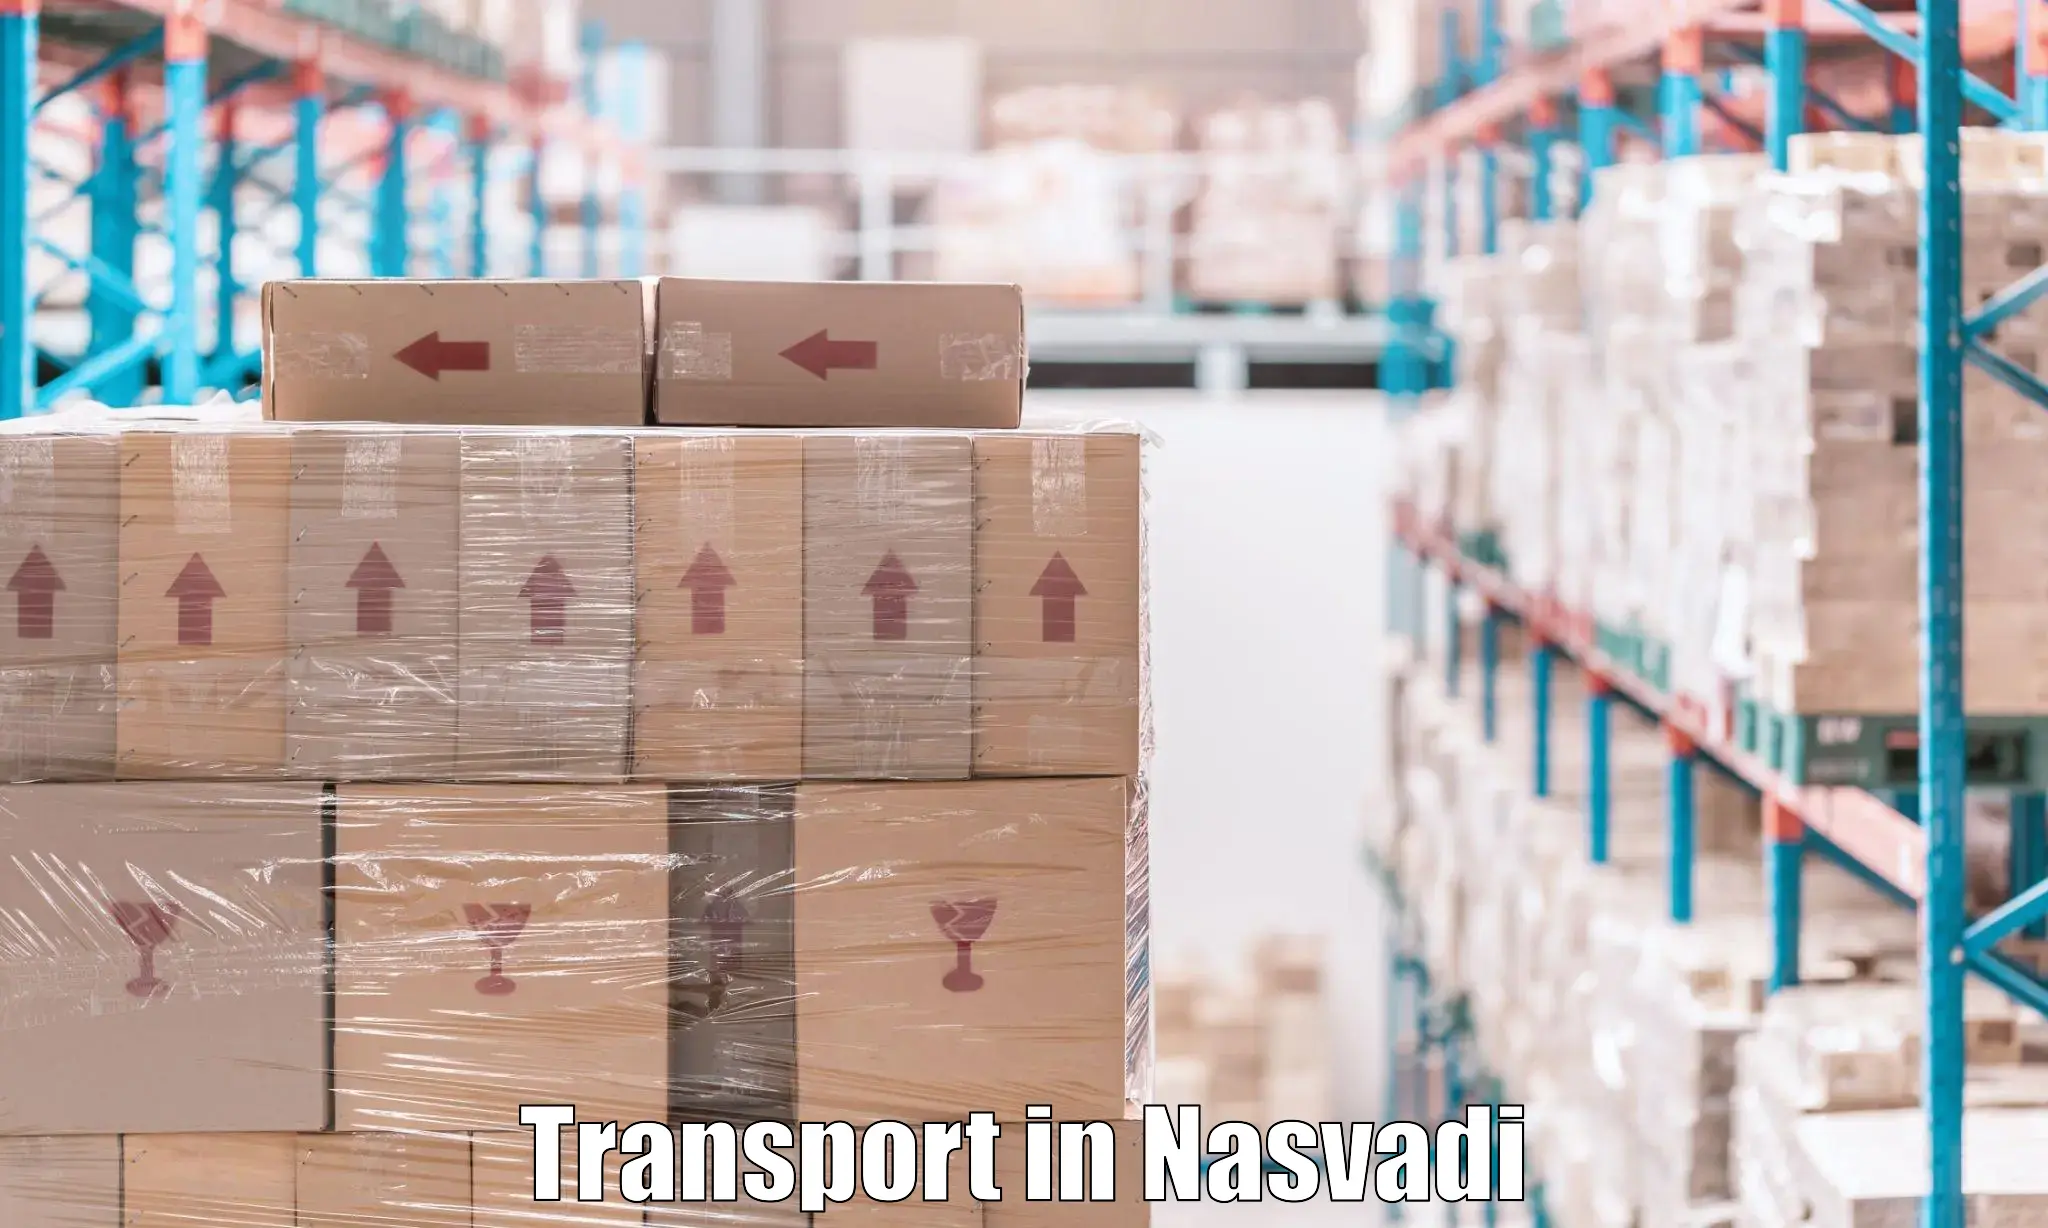 Intercity goods transport in Nasvadi